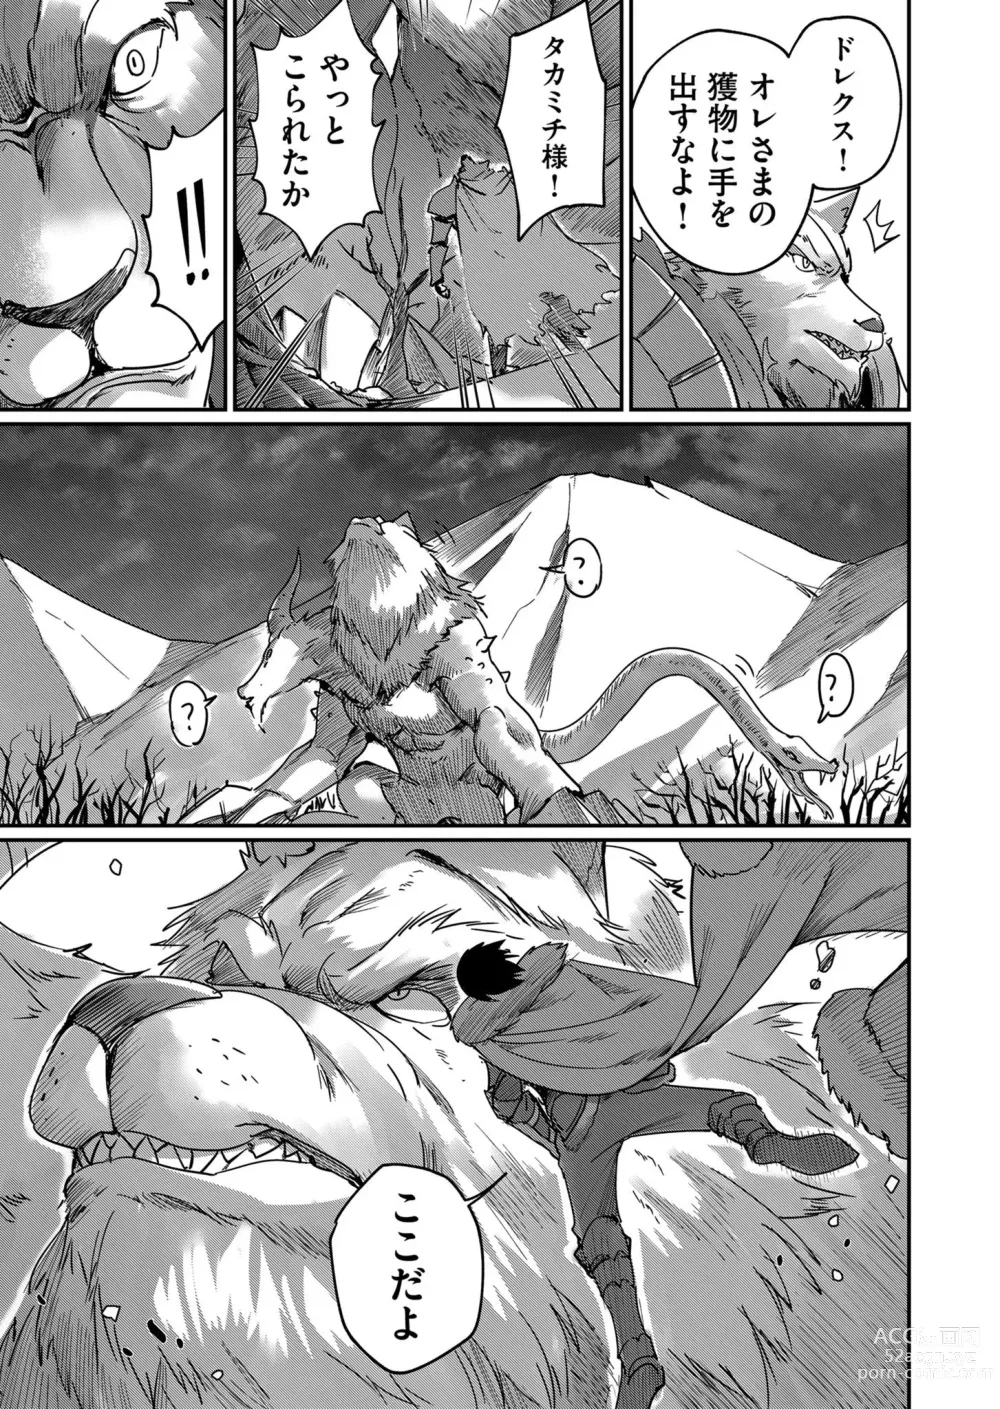 Page 29 of manga Kichiku Eiyuu Vol.01